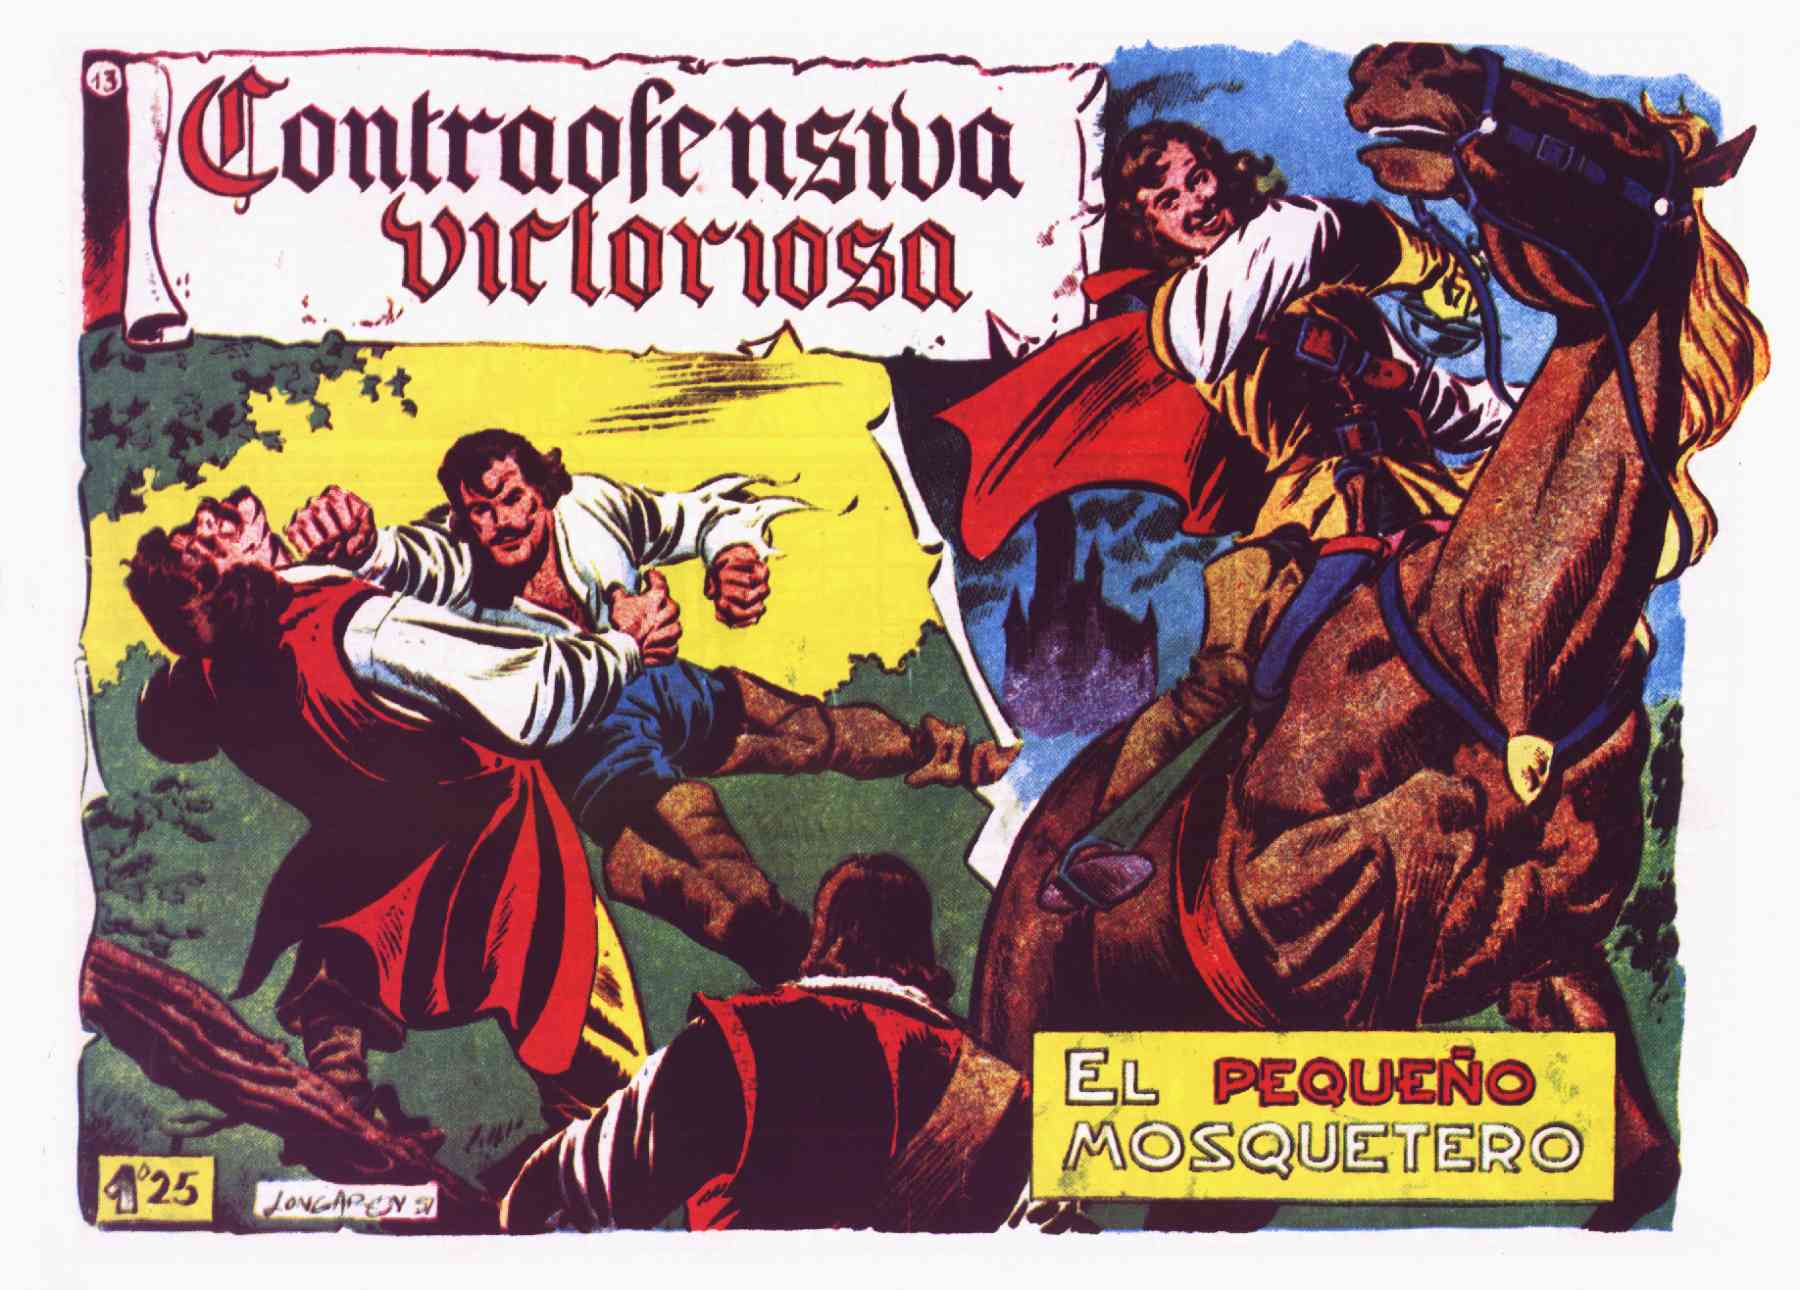 Comic Book Cover For El Pequeño Mosquetero 13 - Contraofensiva Victoriosa